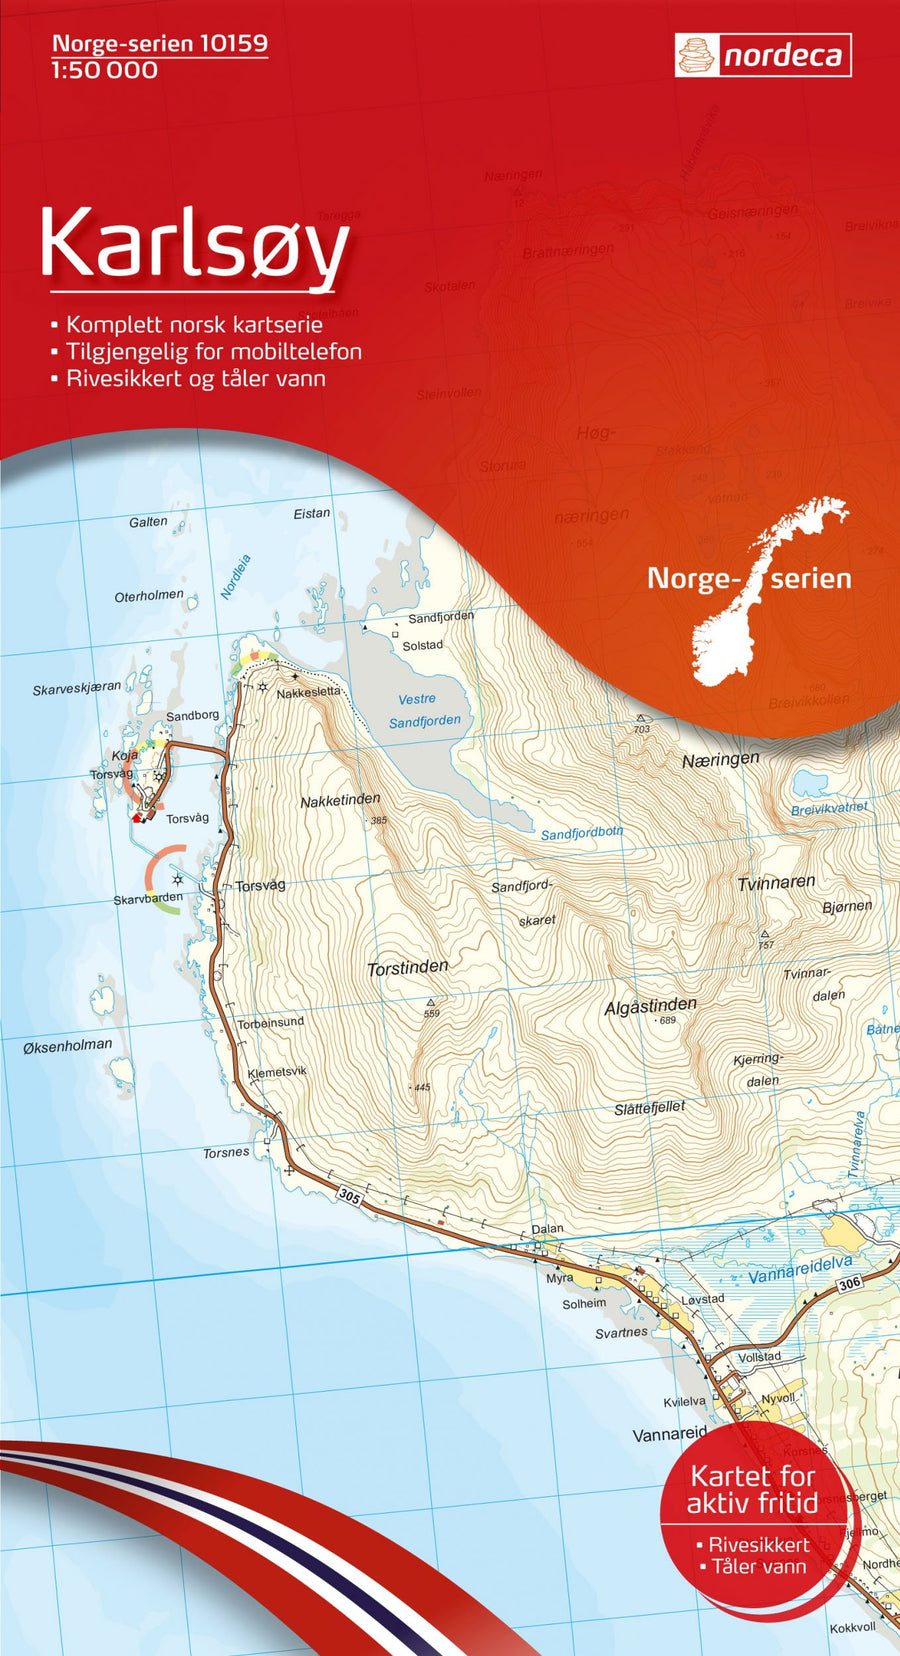 Carte de randonnée n° 10159 - Karlsoy (Norvège) | Nordeca - Norge-serien carte pliée Nordeca 